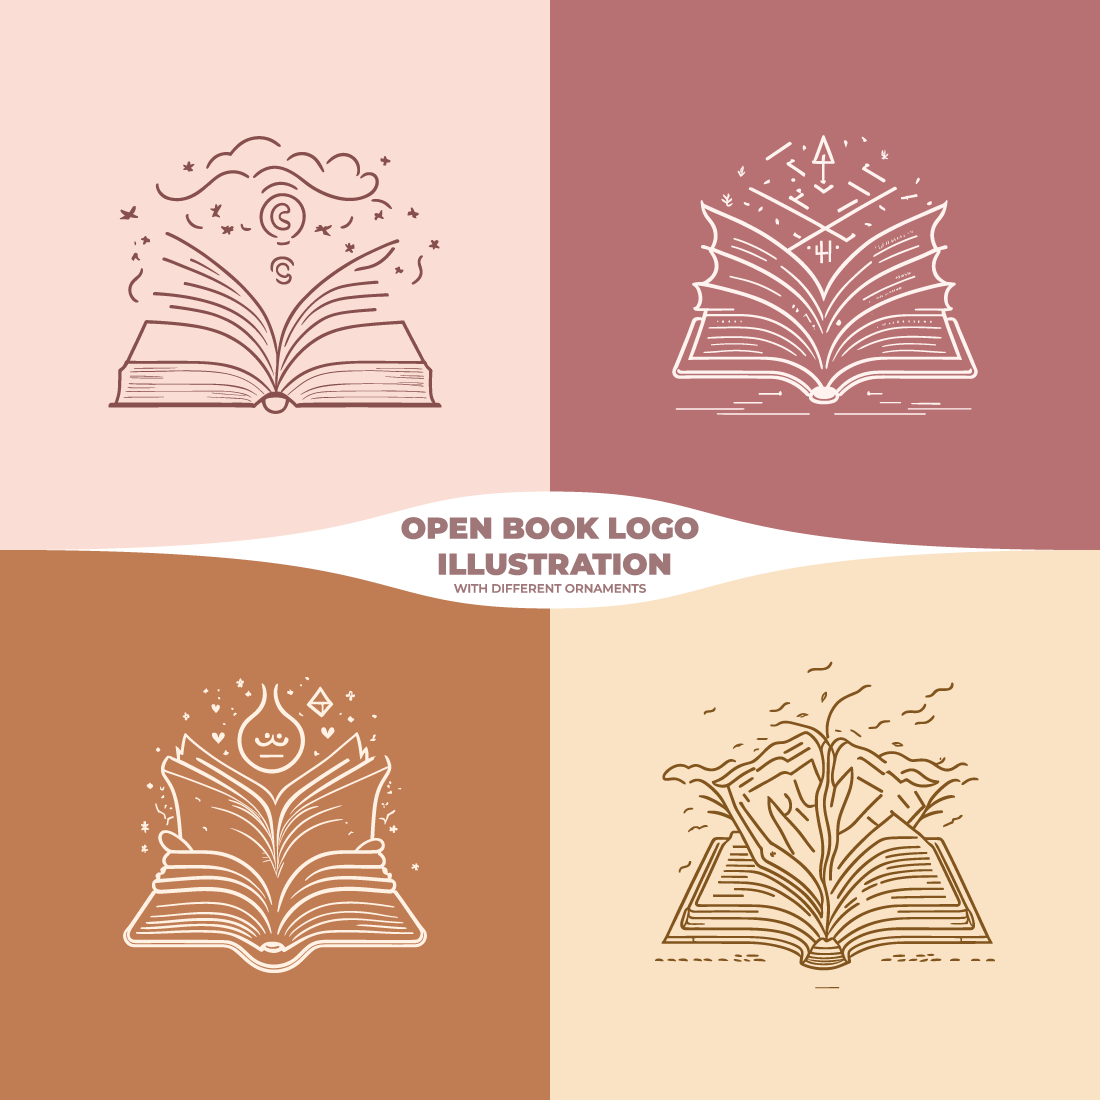 Open book with ornaments line art logo illustration bundle preview image.